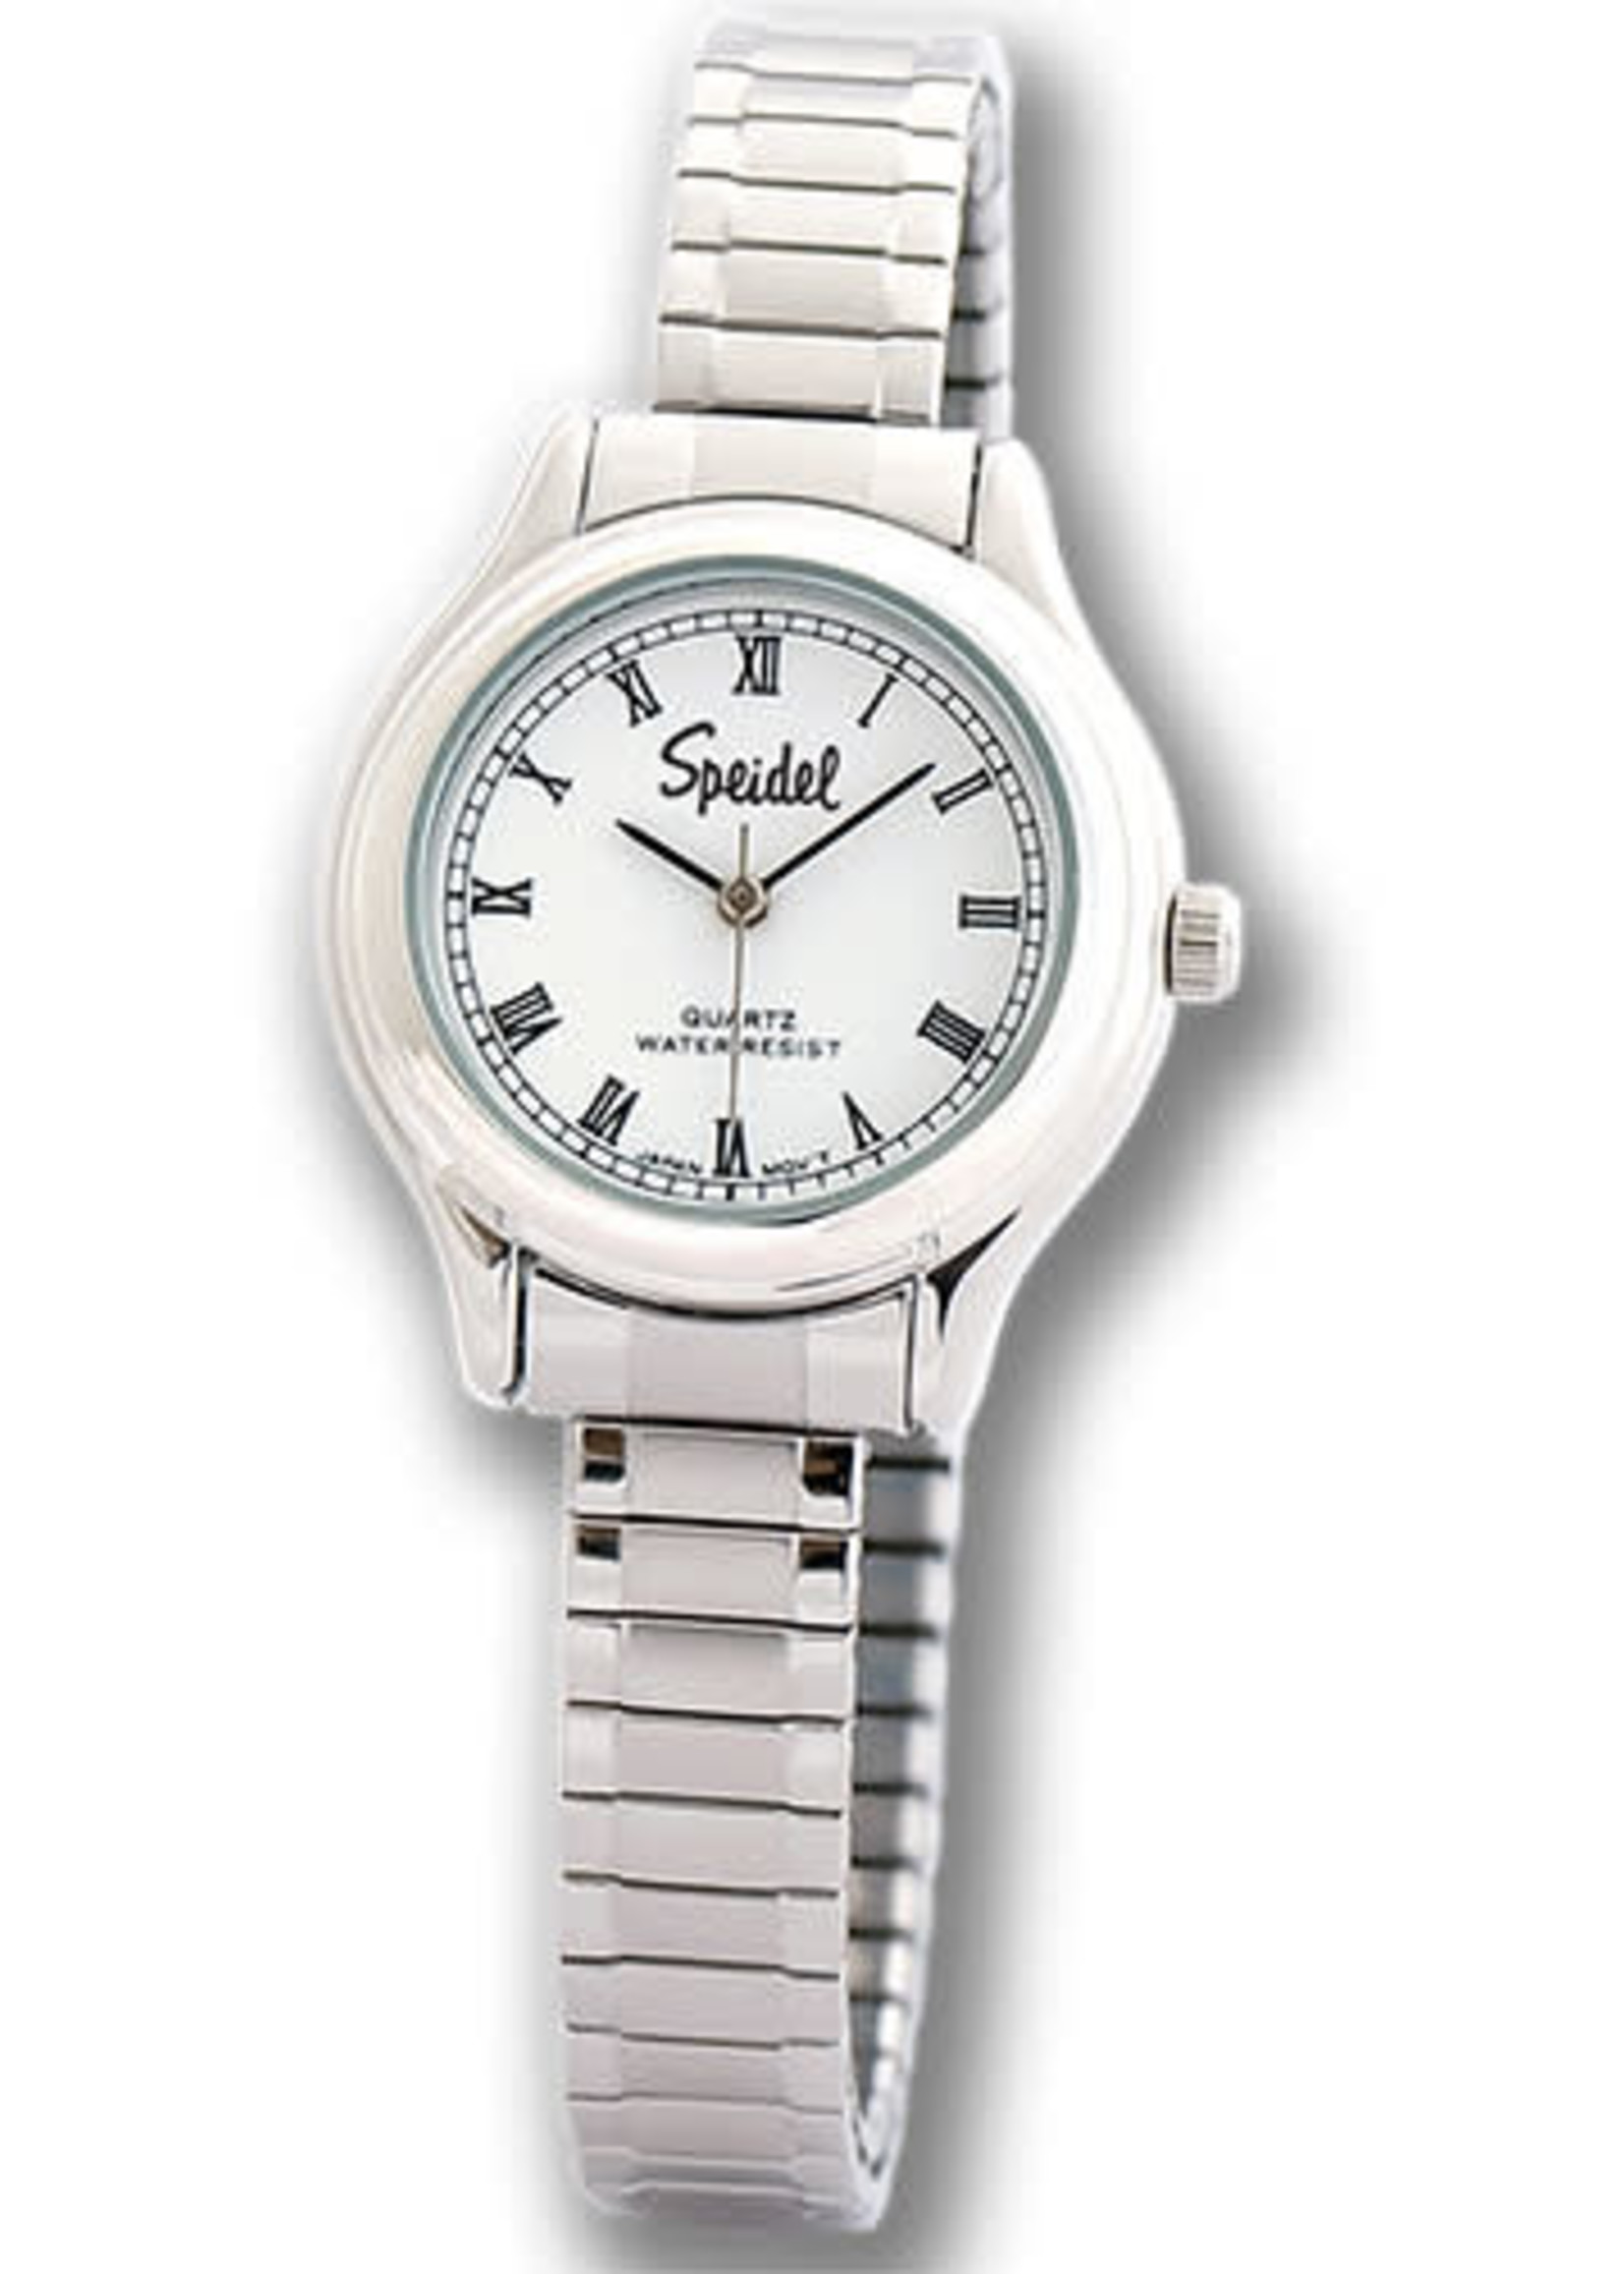 SPEIDEL INC. Ladies Speidel Silver/White Roman Numeral Twist-o-Flex Watch